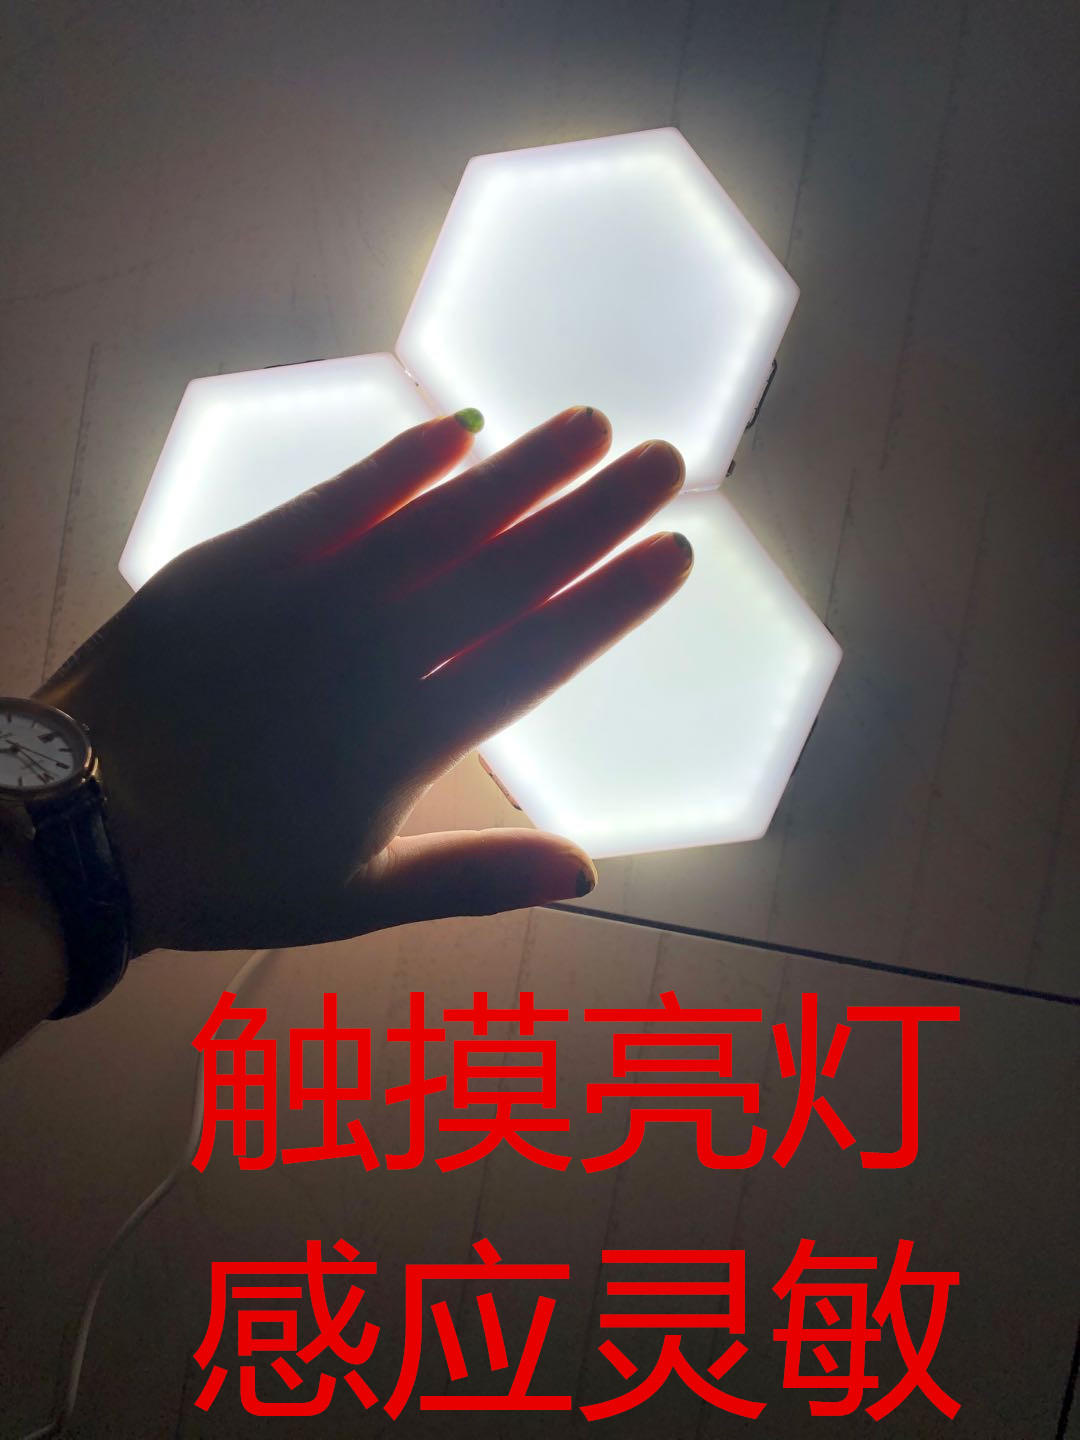 OEMWeb celebrity splice hand touch bright modular night light hexagonal black family quantum honeycomb induction wall lamp